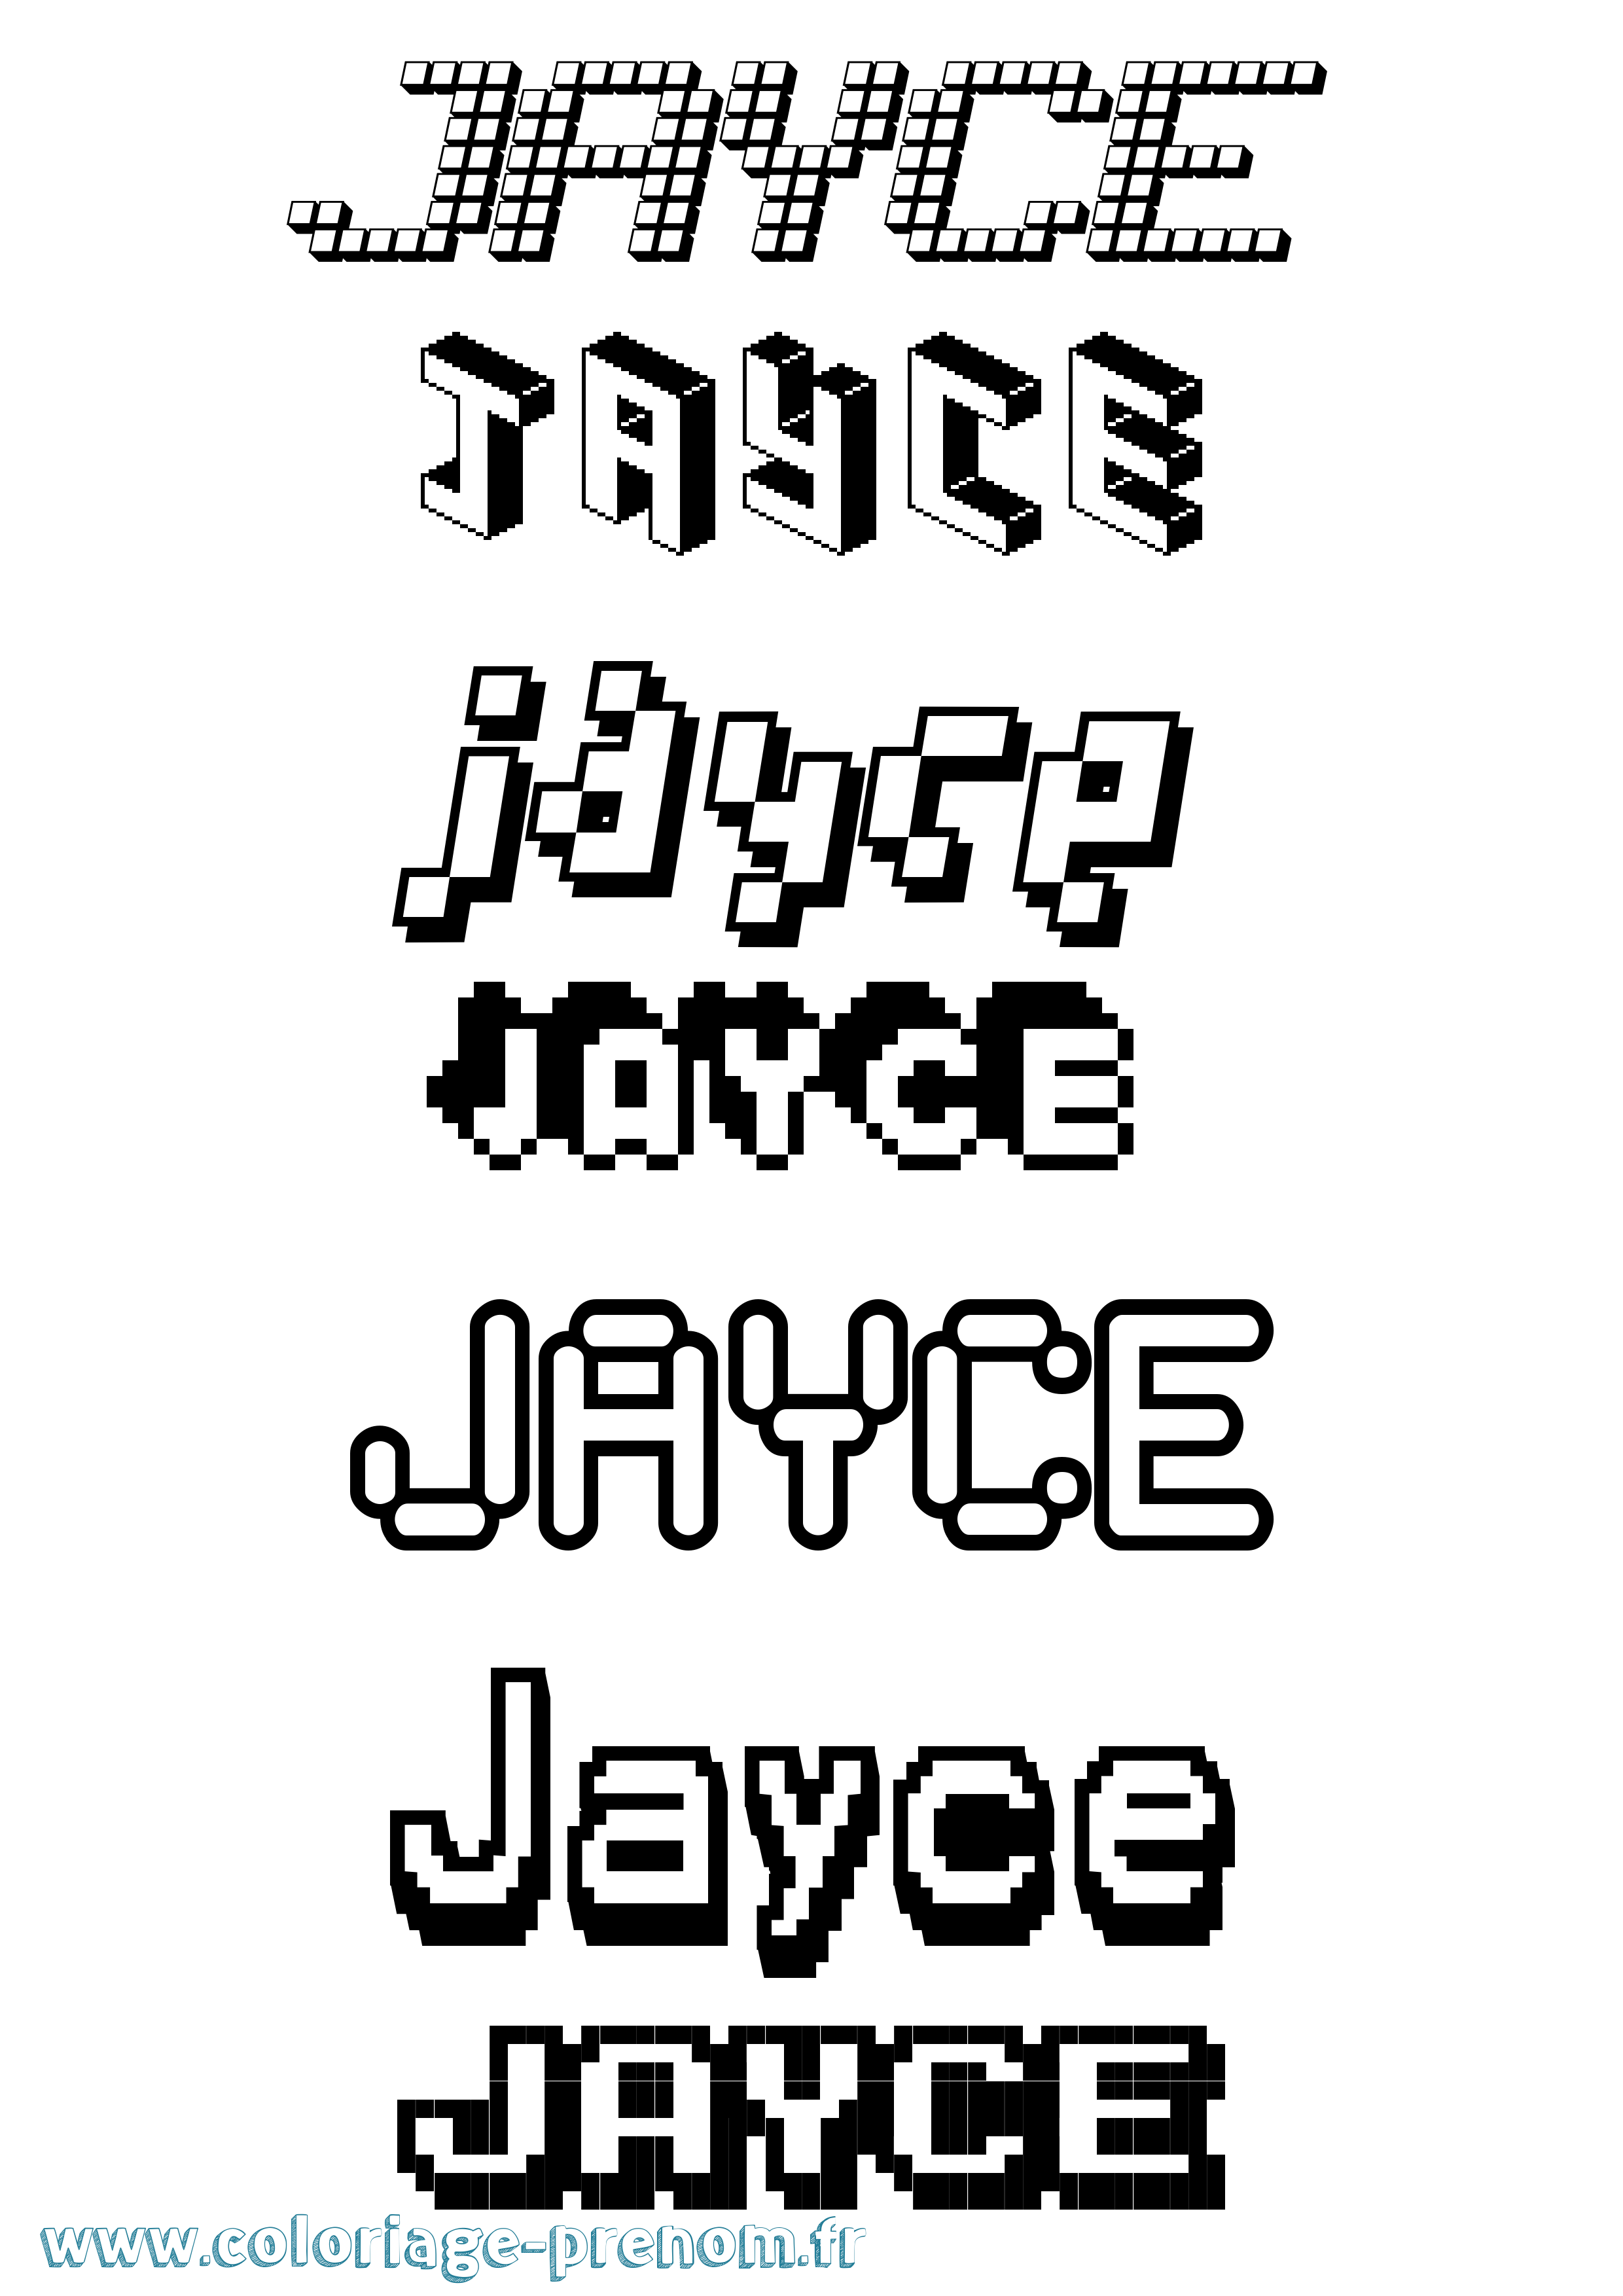 Coloriage prénom Jayce Pixel